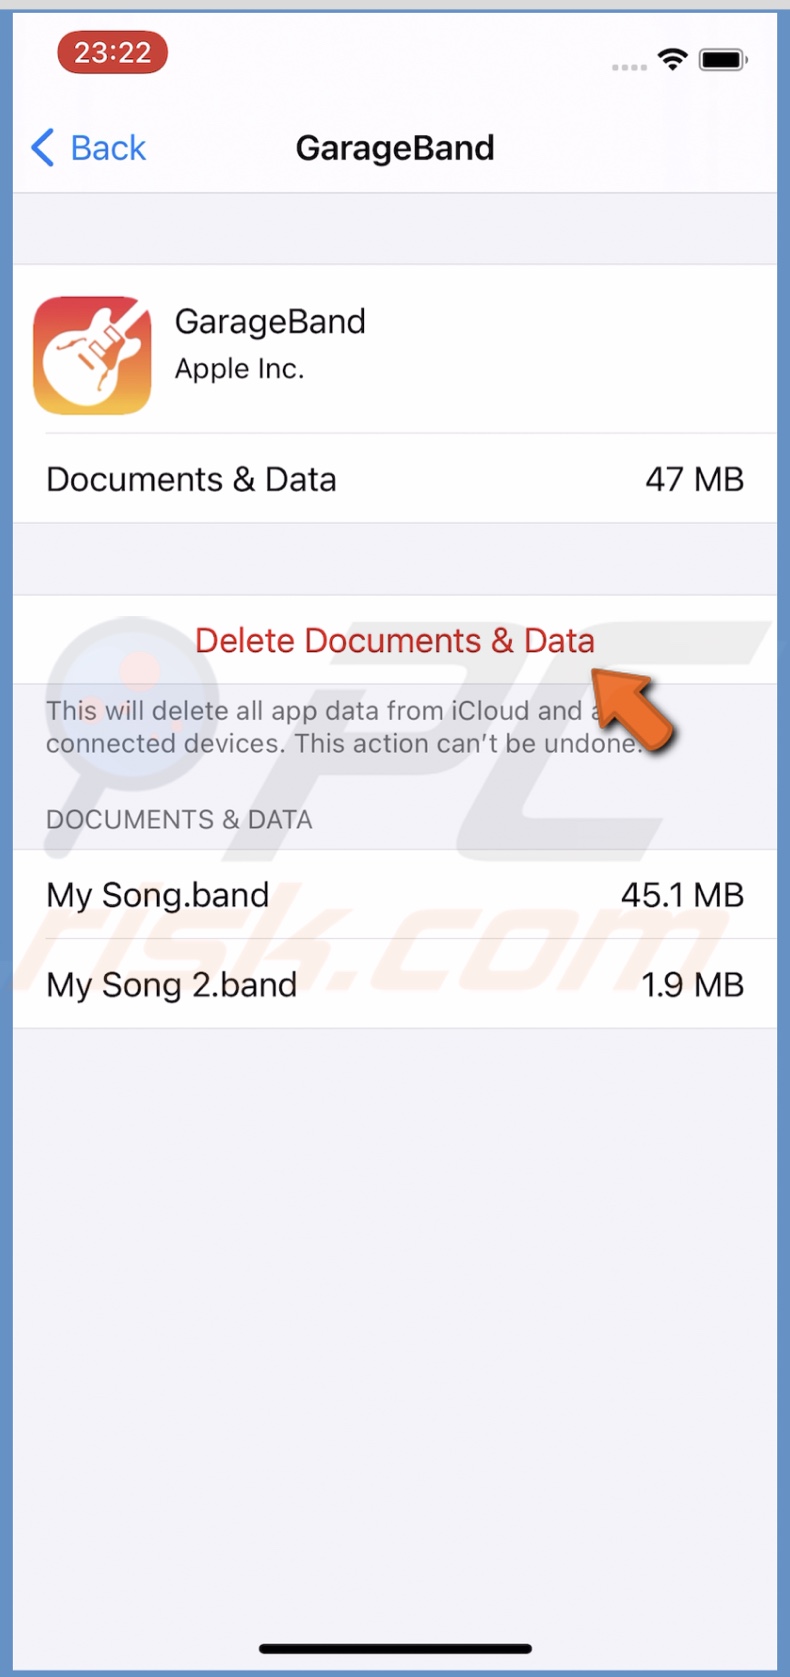 Deleet Documents & Data